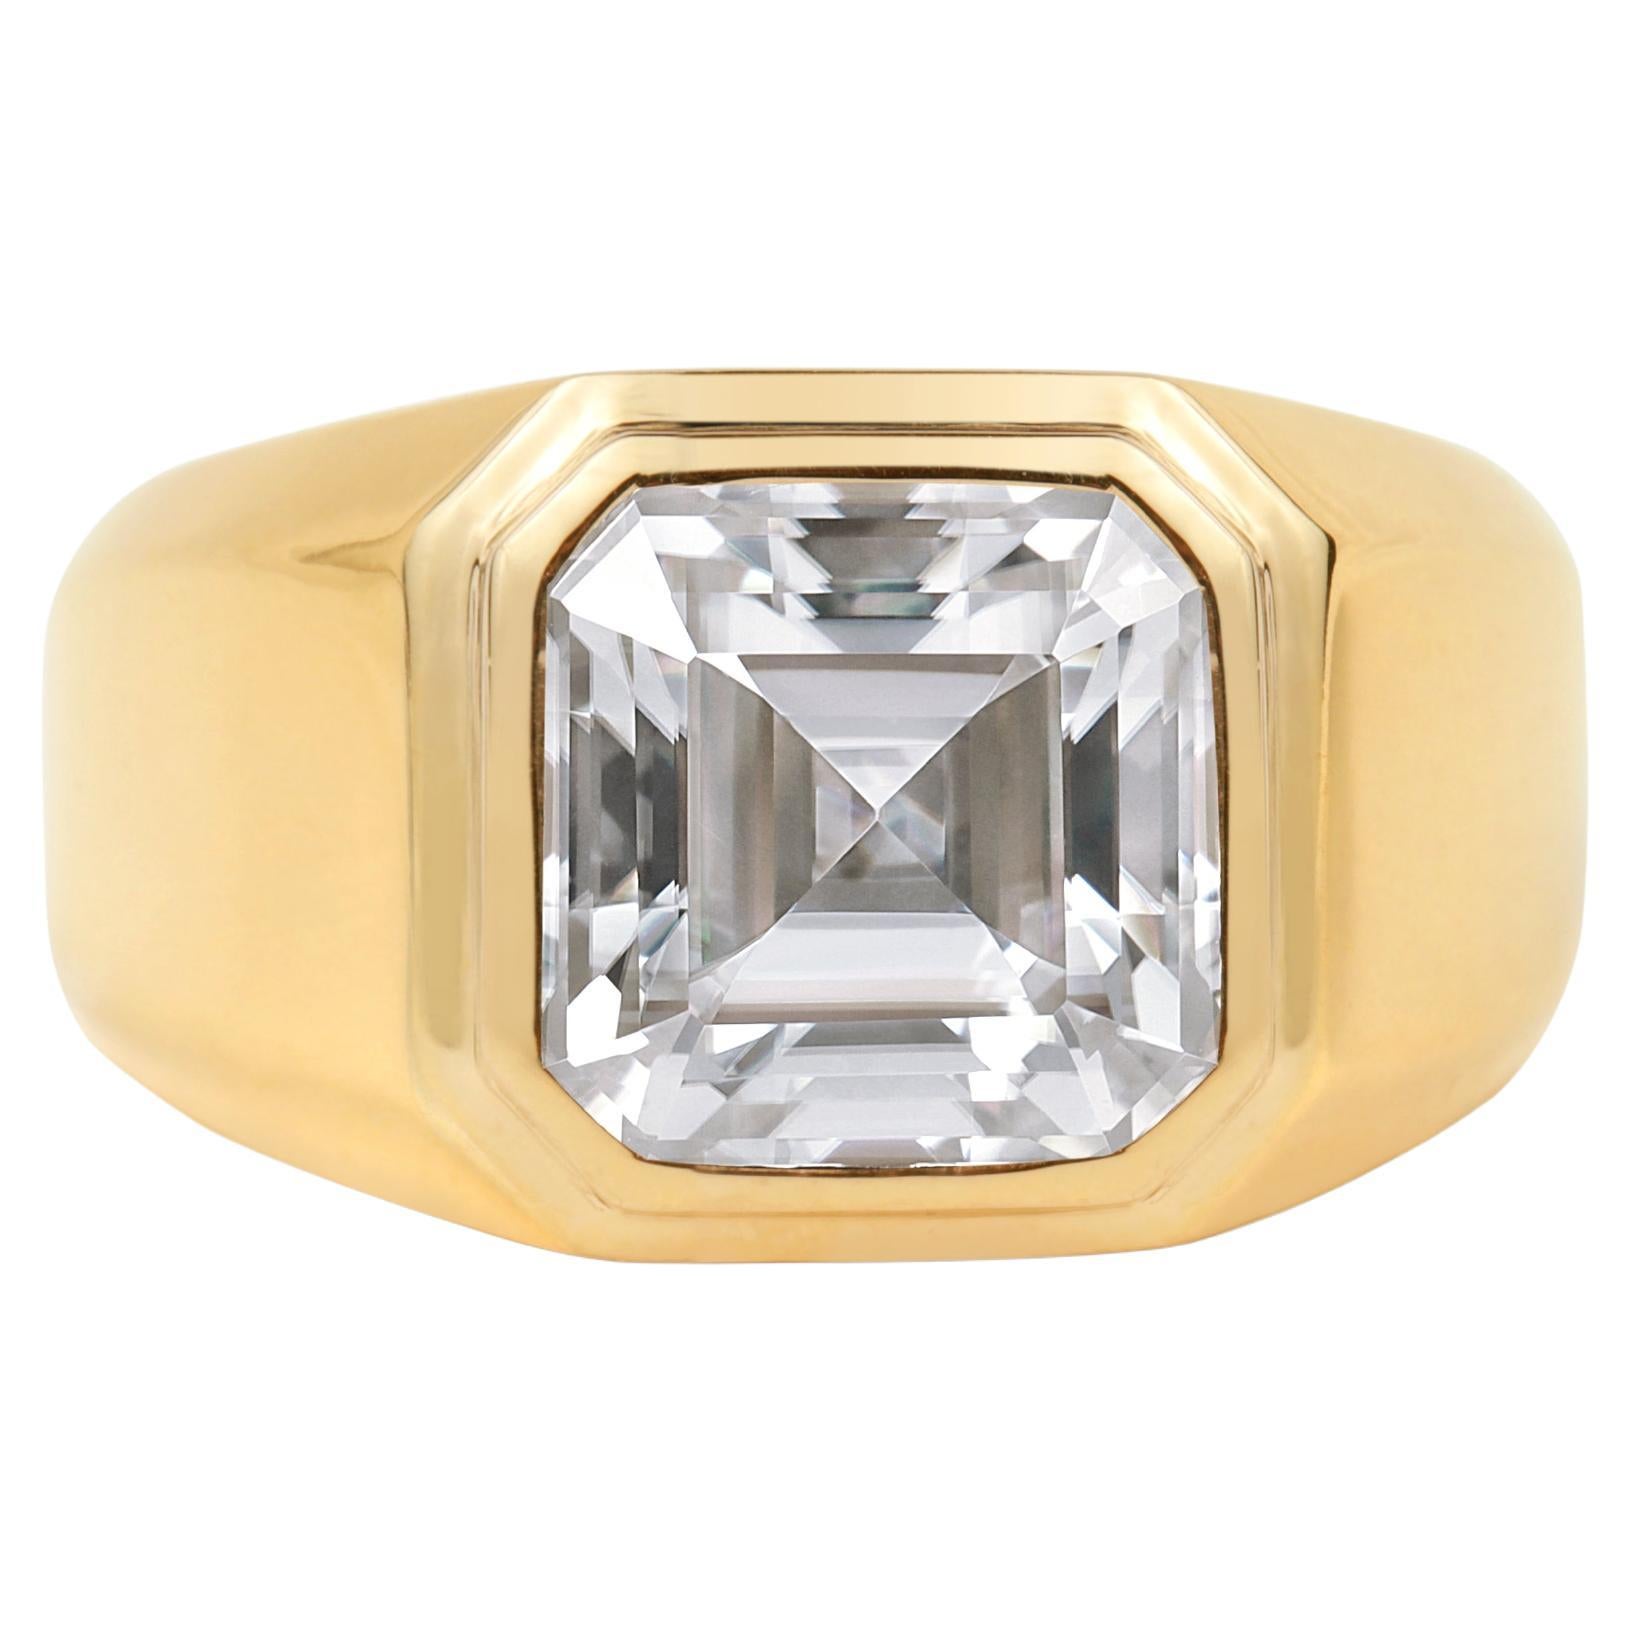 Bague signet Asscher en or jaune 18 carats avec diamants de 3 carats certifiés GIA 